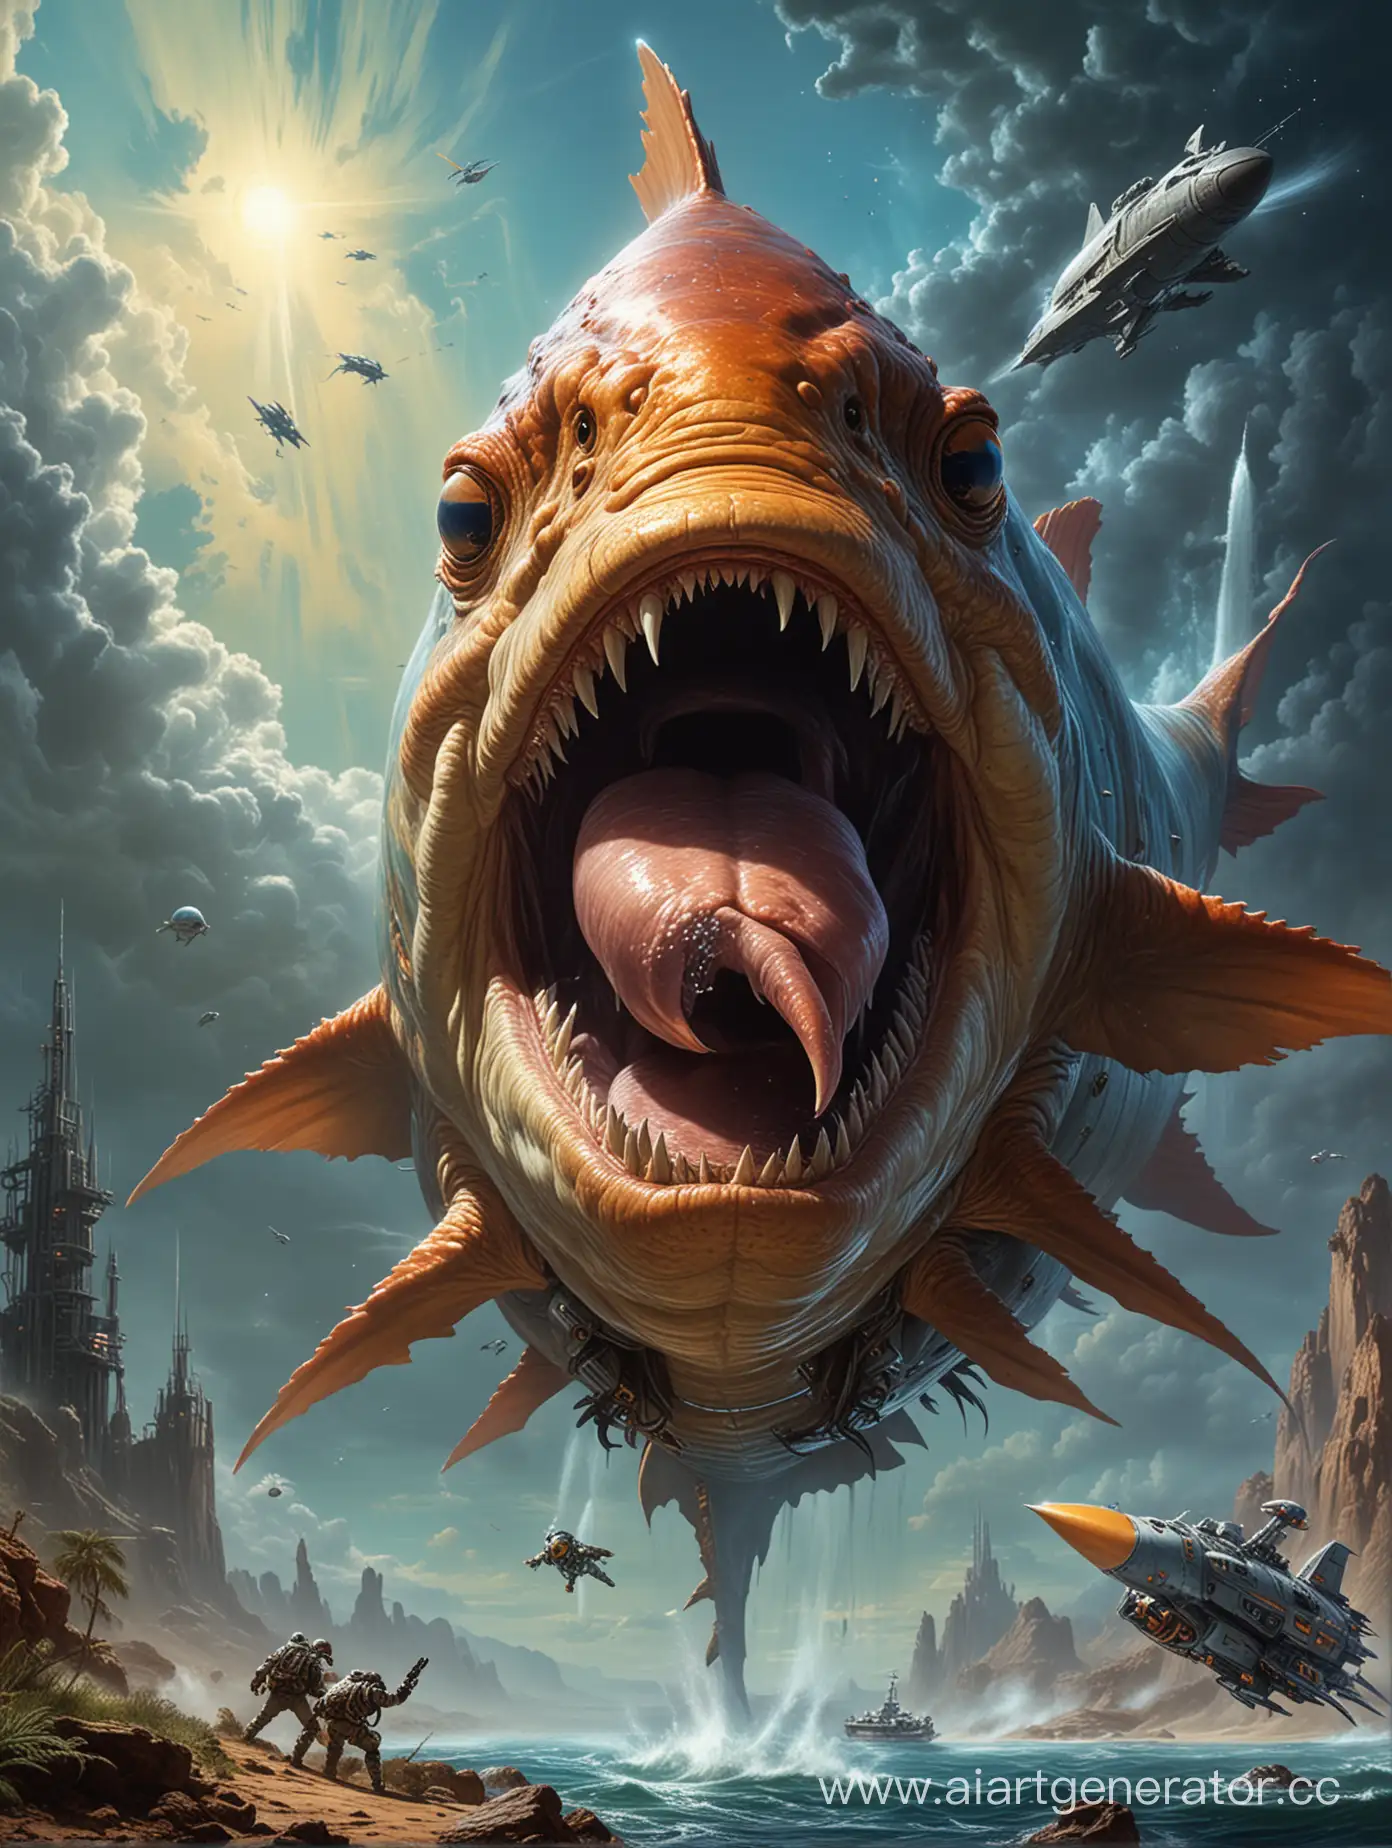 Enormous-FishLike-Creature-Swallowing-Spaceship-in-Surreal-Fantasy-Art